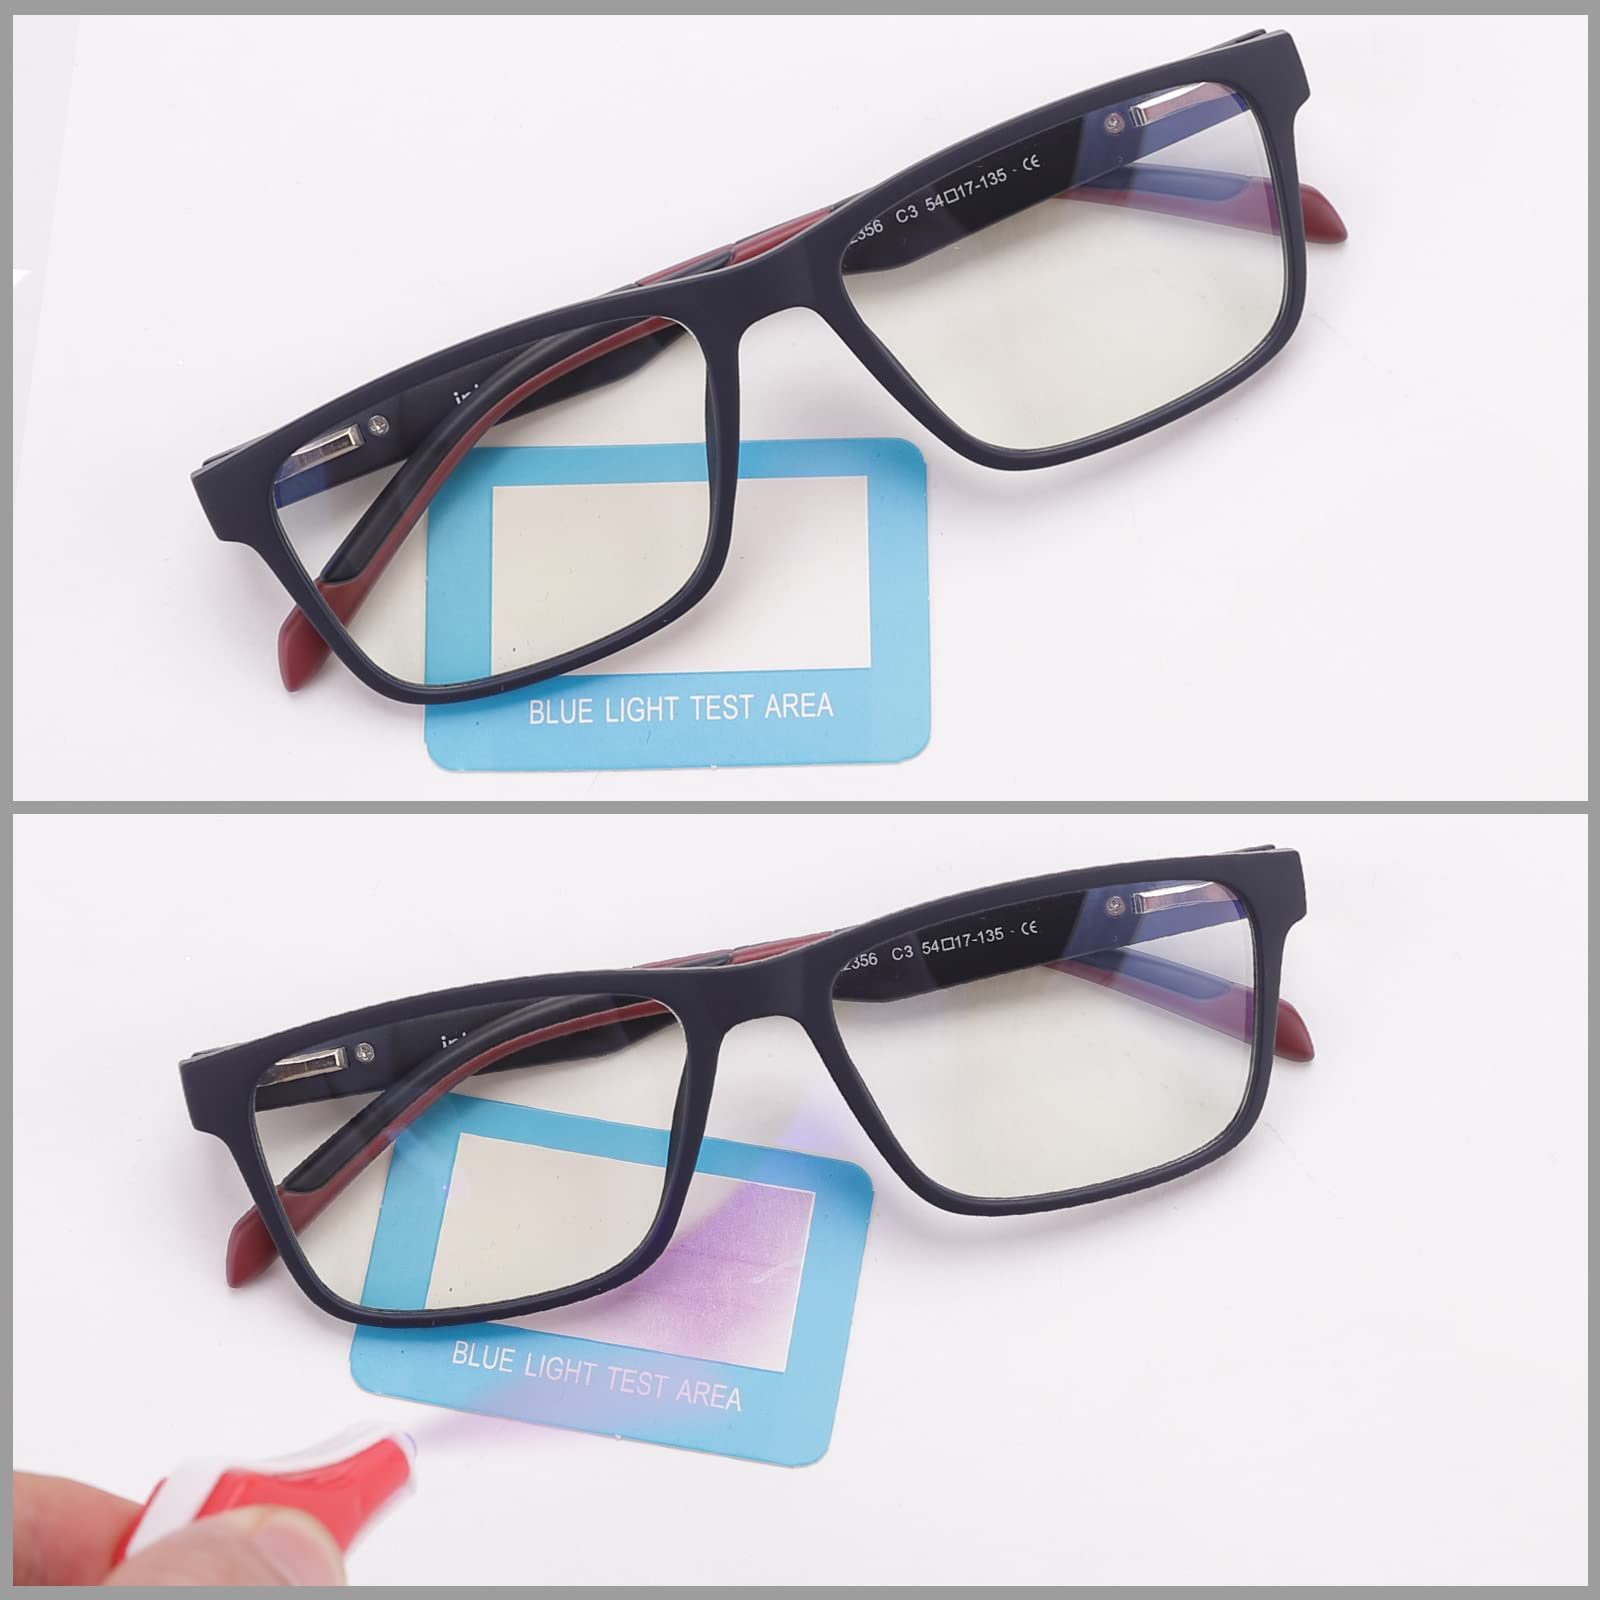 Intellilens Square Blue Cut Computer Glasses for Eye Protection | Zero Power, Anti Glare & Blue Light Filter Glasses | UV Protection Eye Glass for Men & Women (Matte Black & Red) (54-17-135)